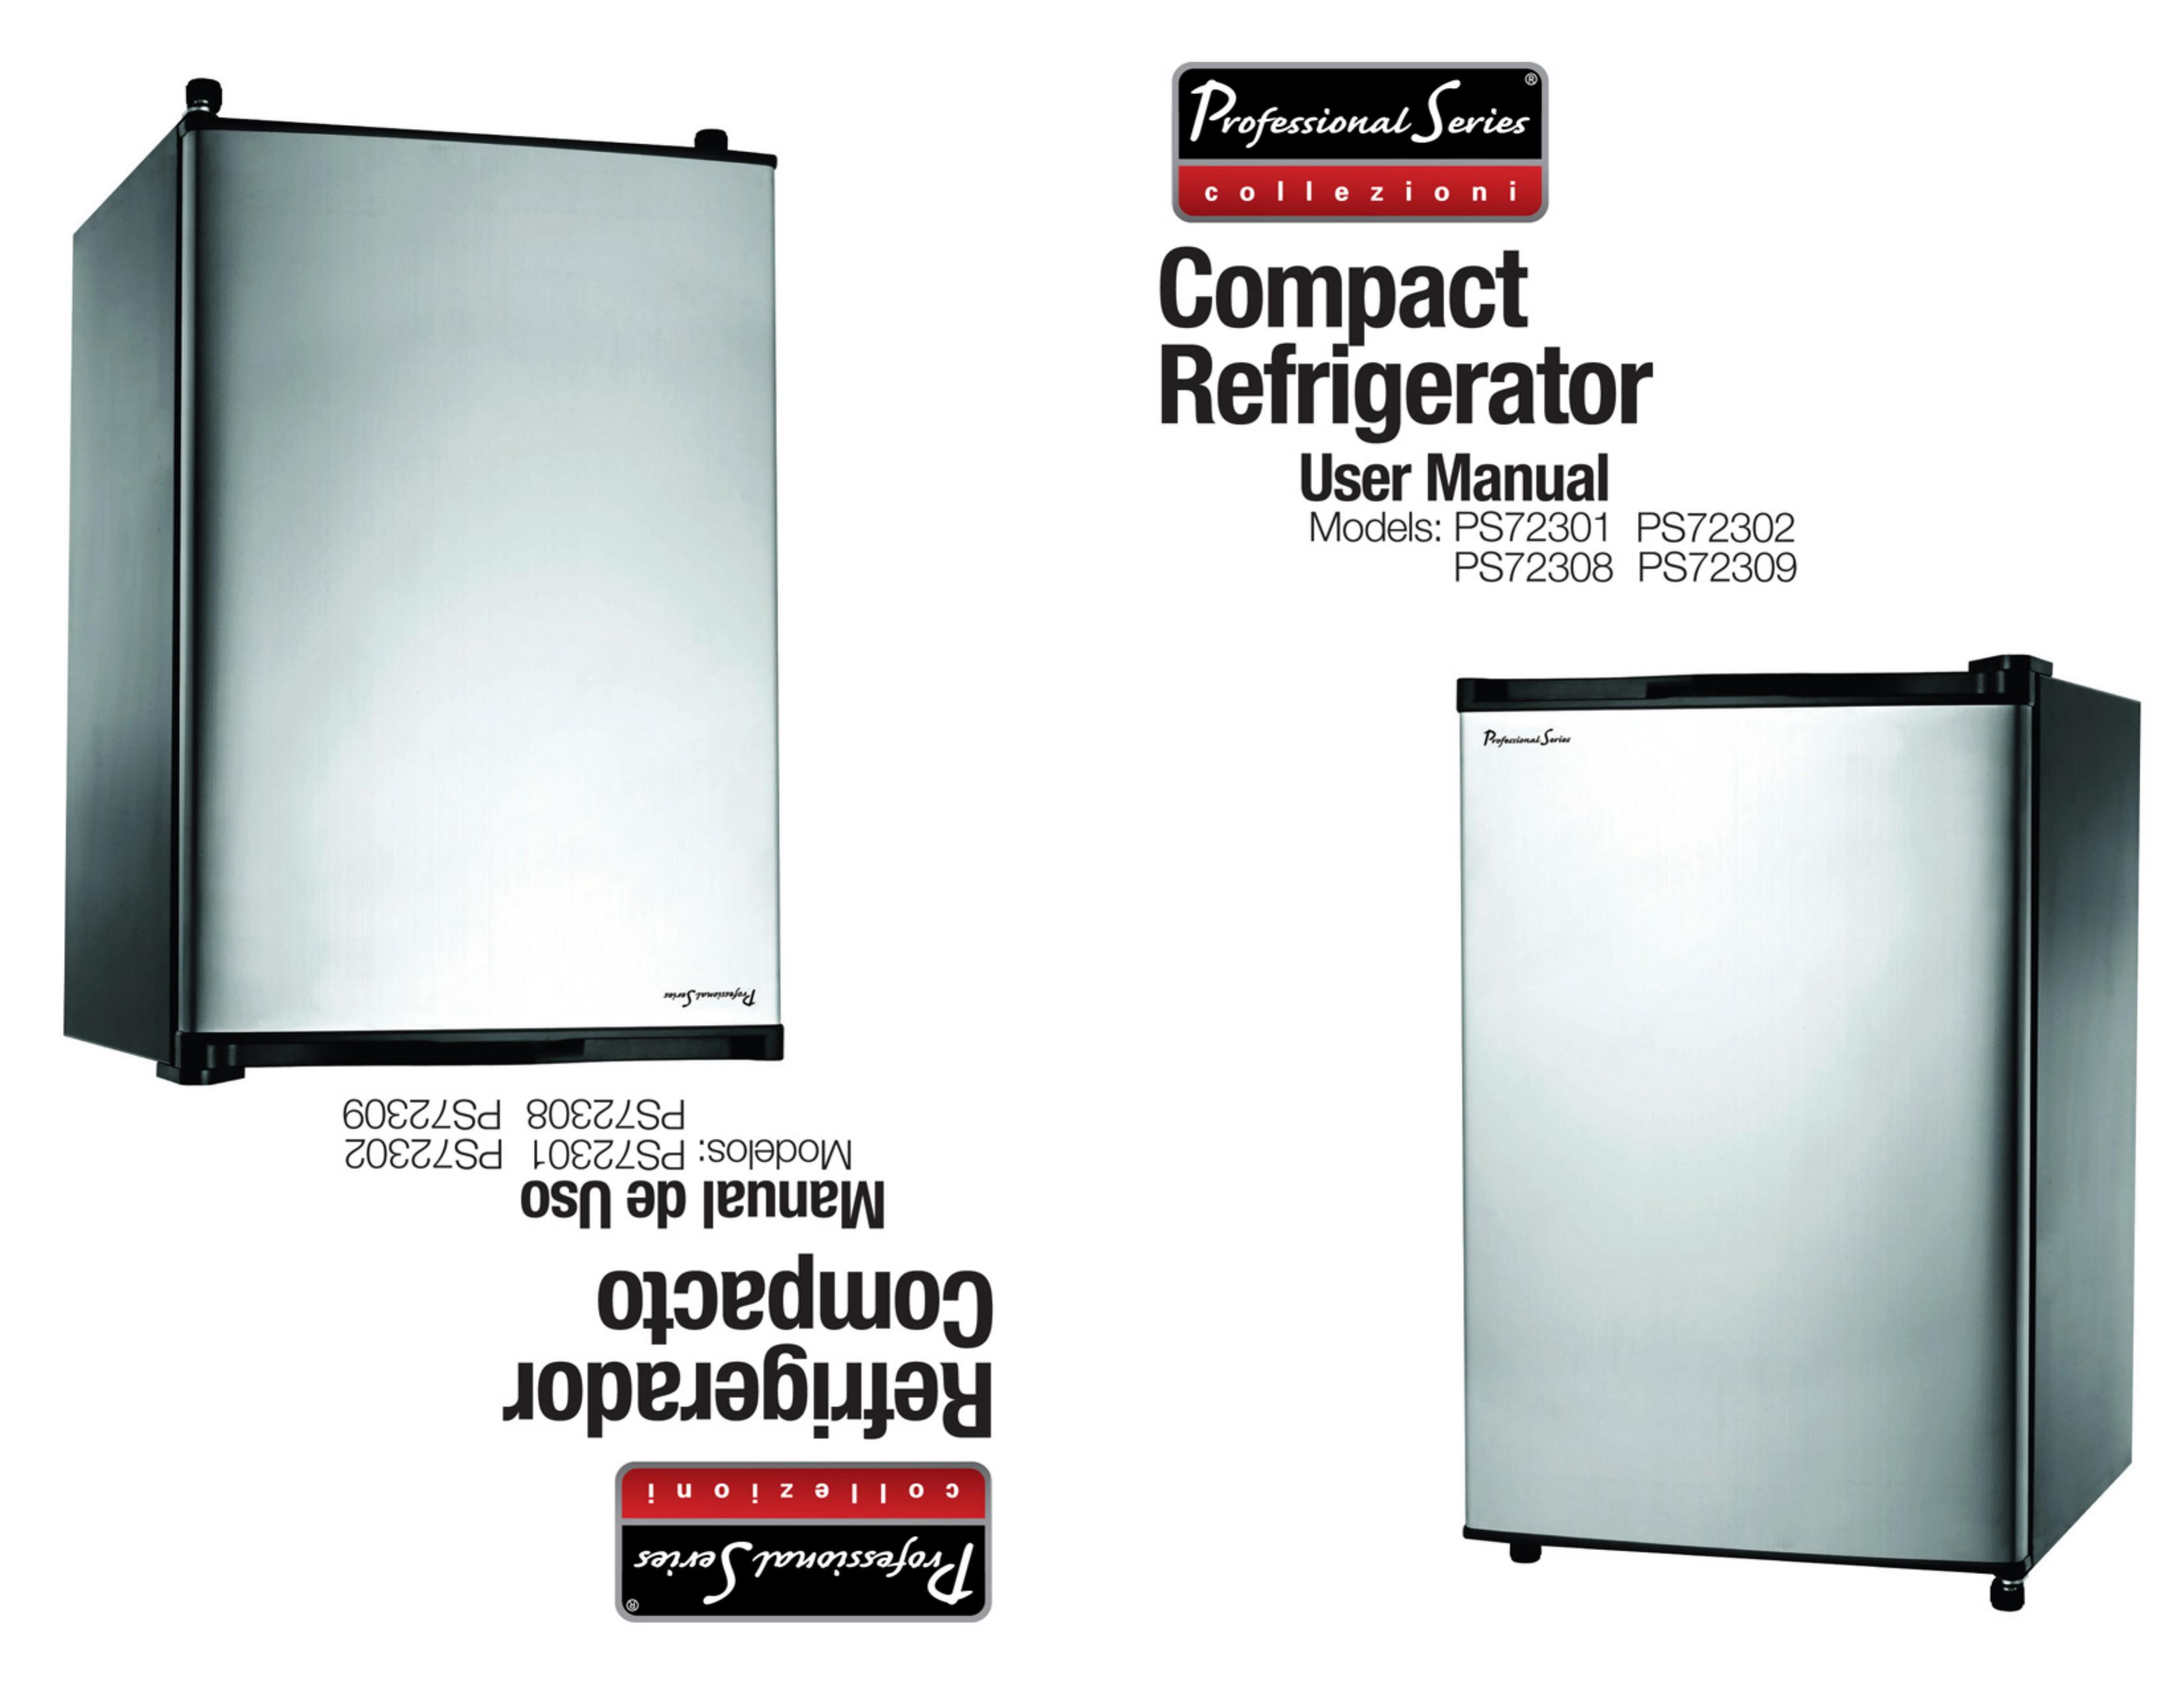 Professional Series PS72309 Refrigerator User Manual